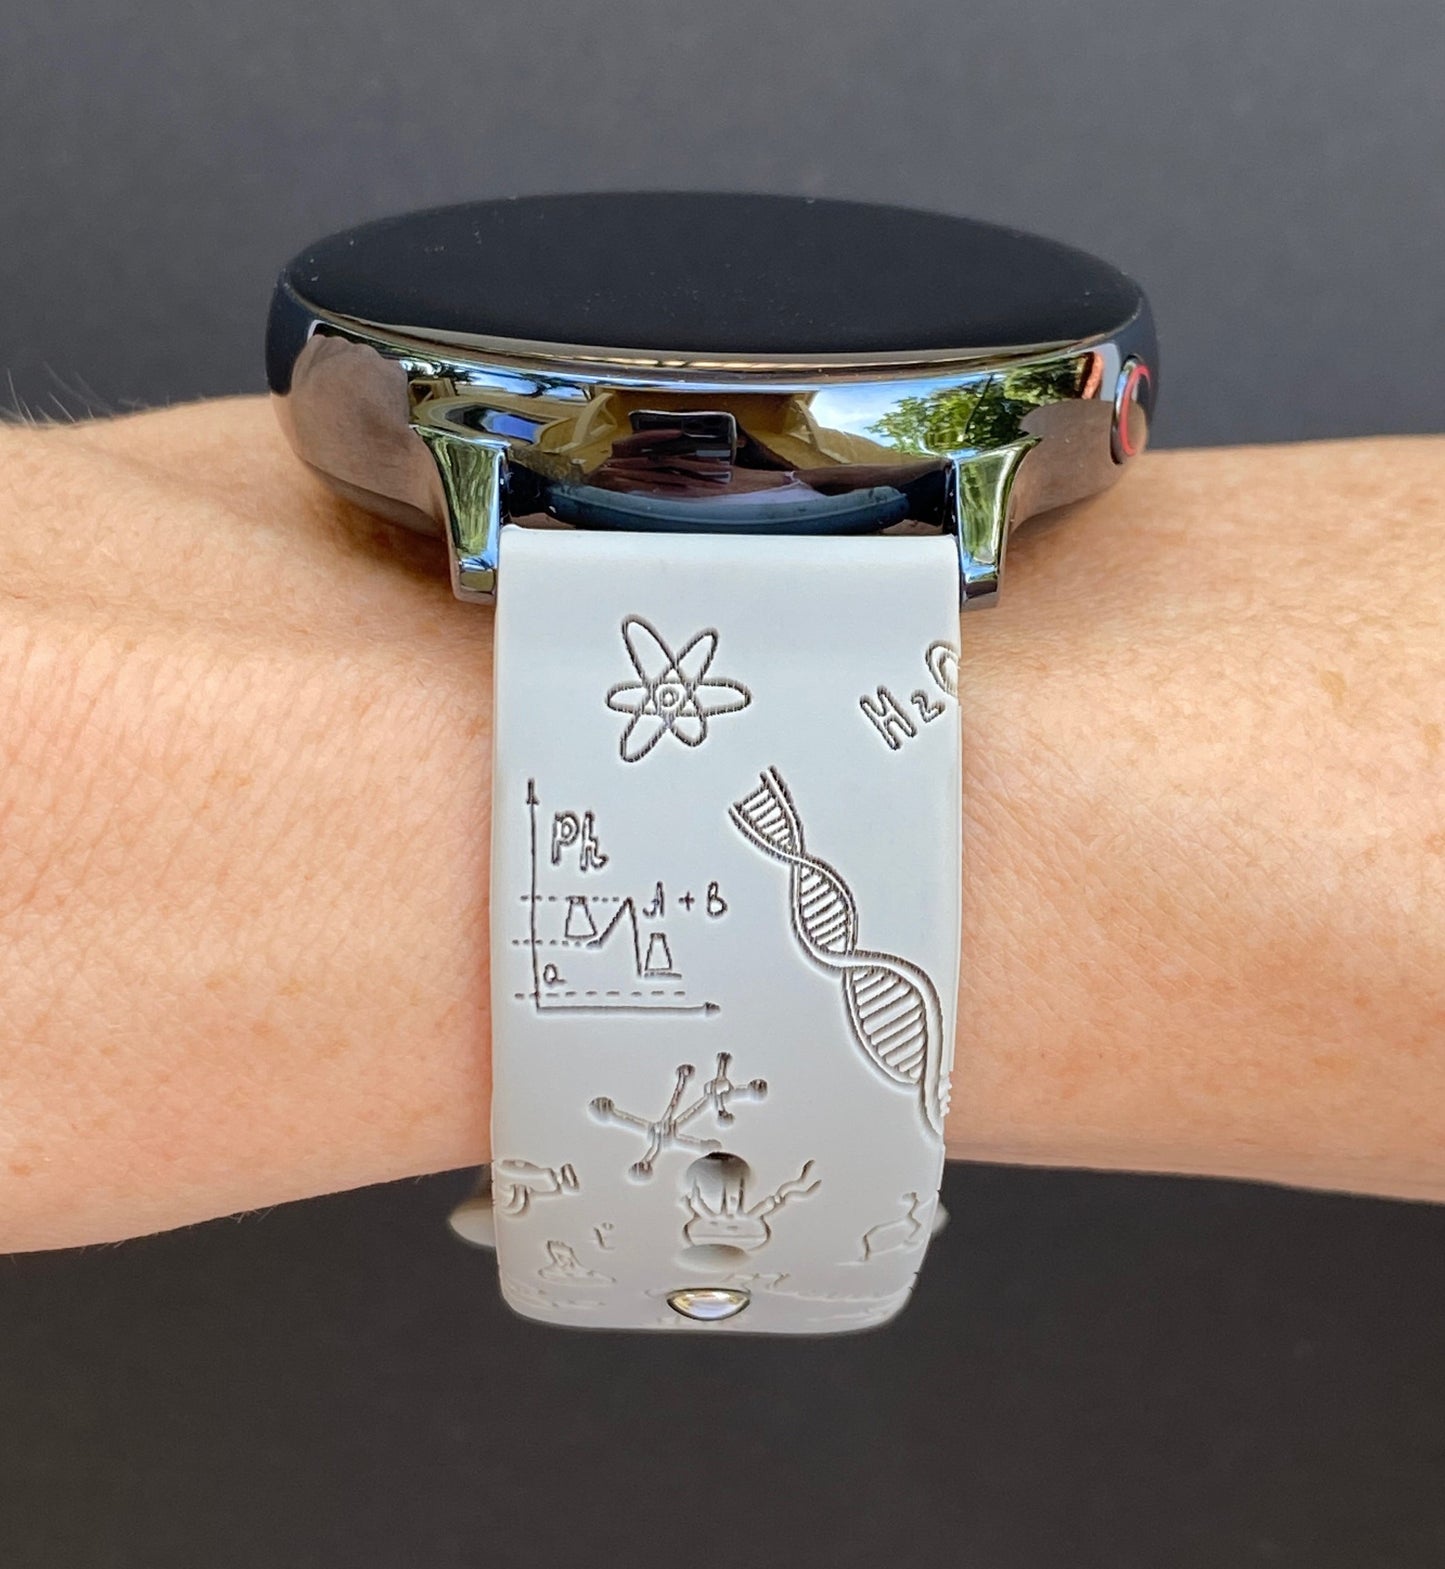 Science 20mm Samsung Galaxy Watch Band